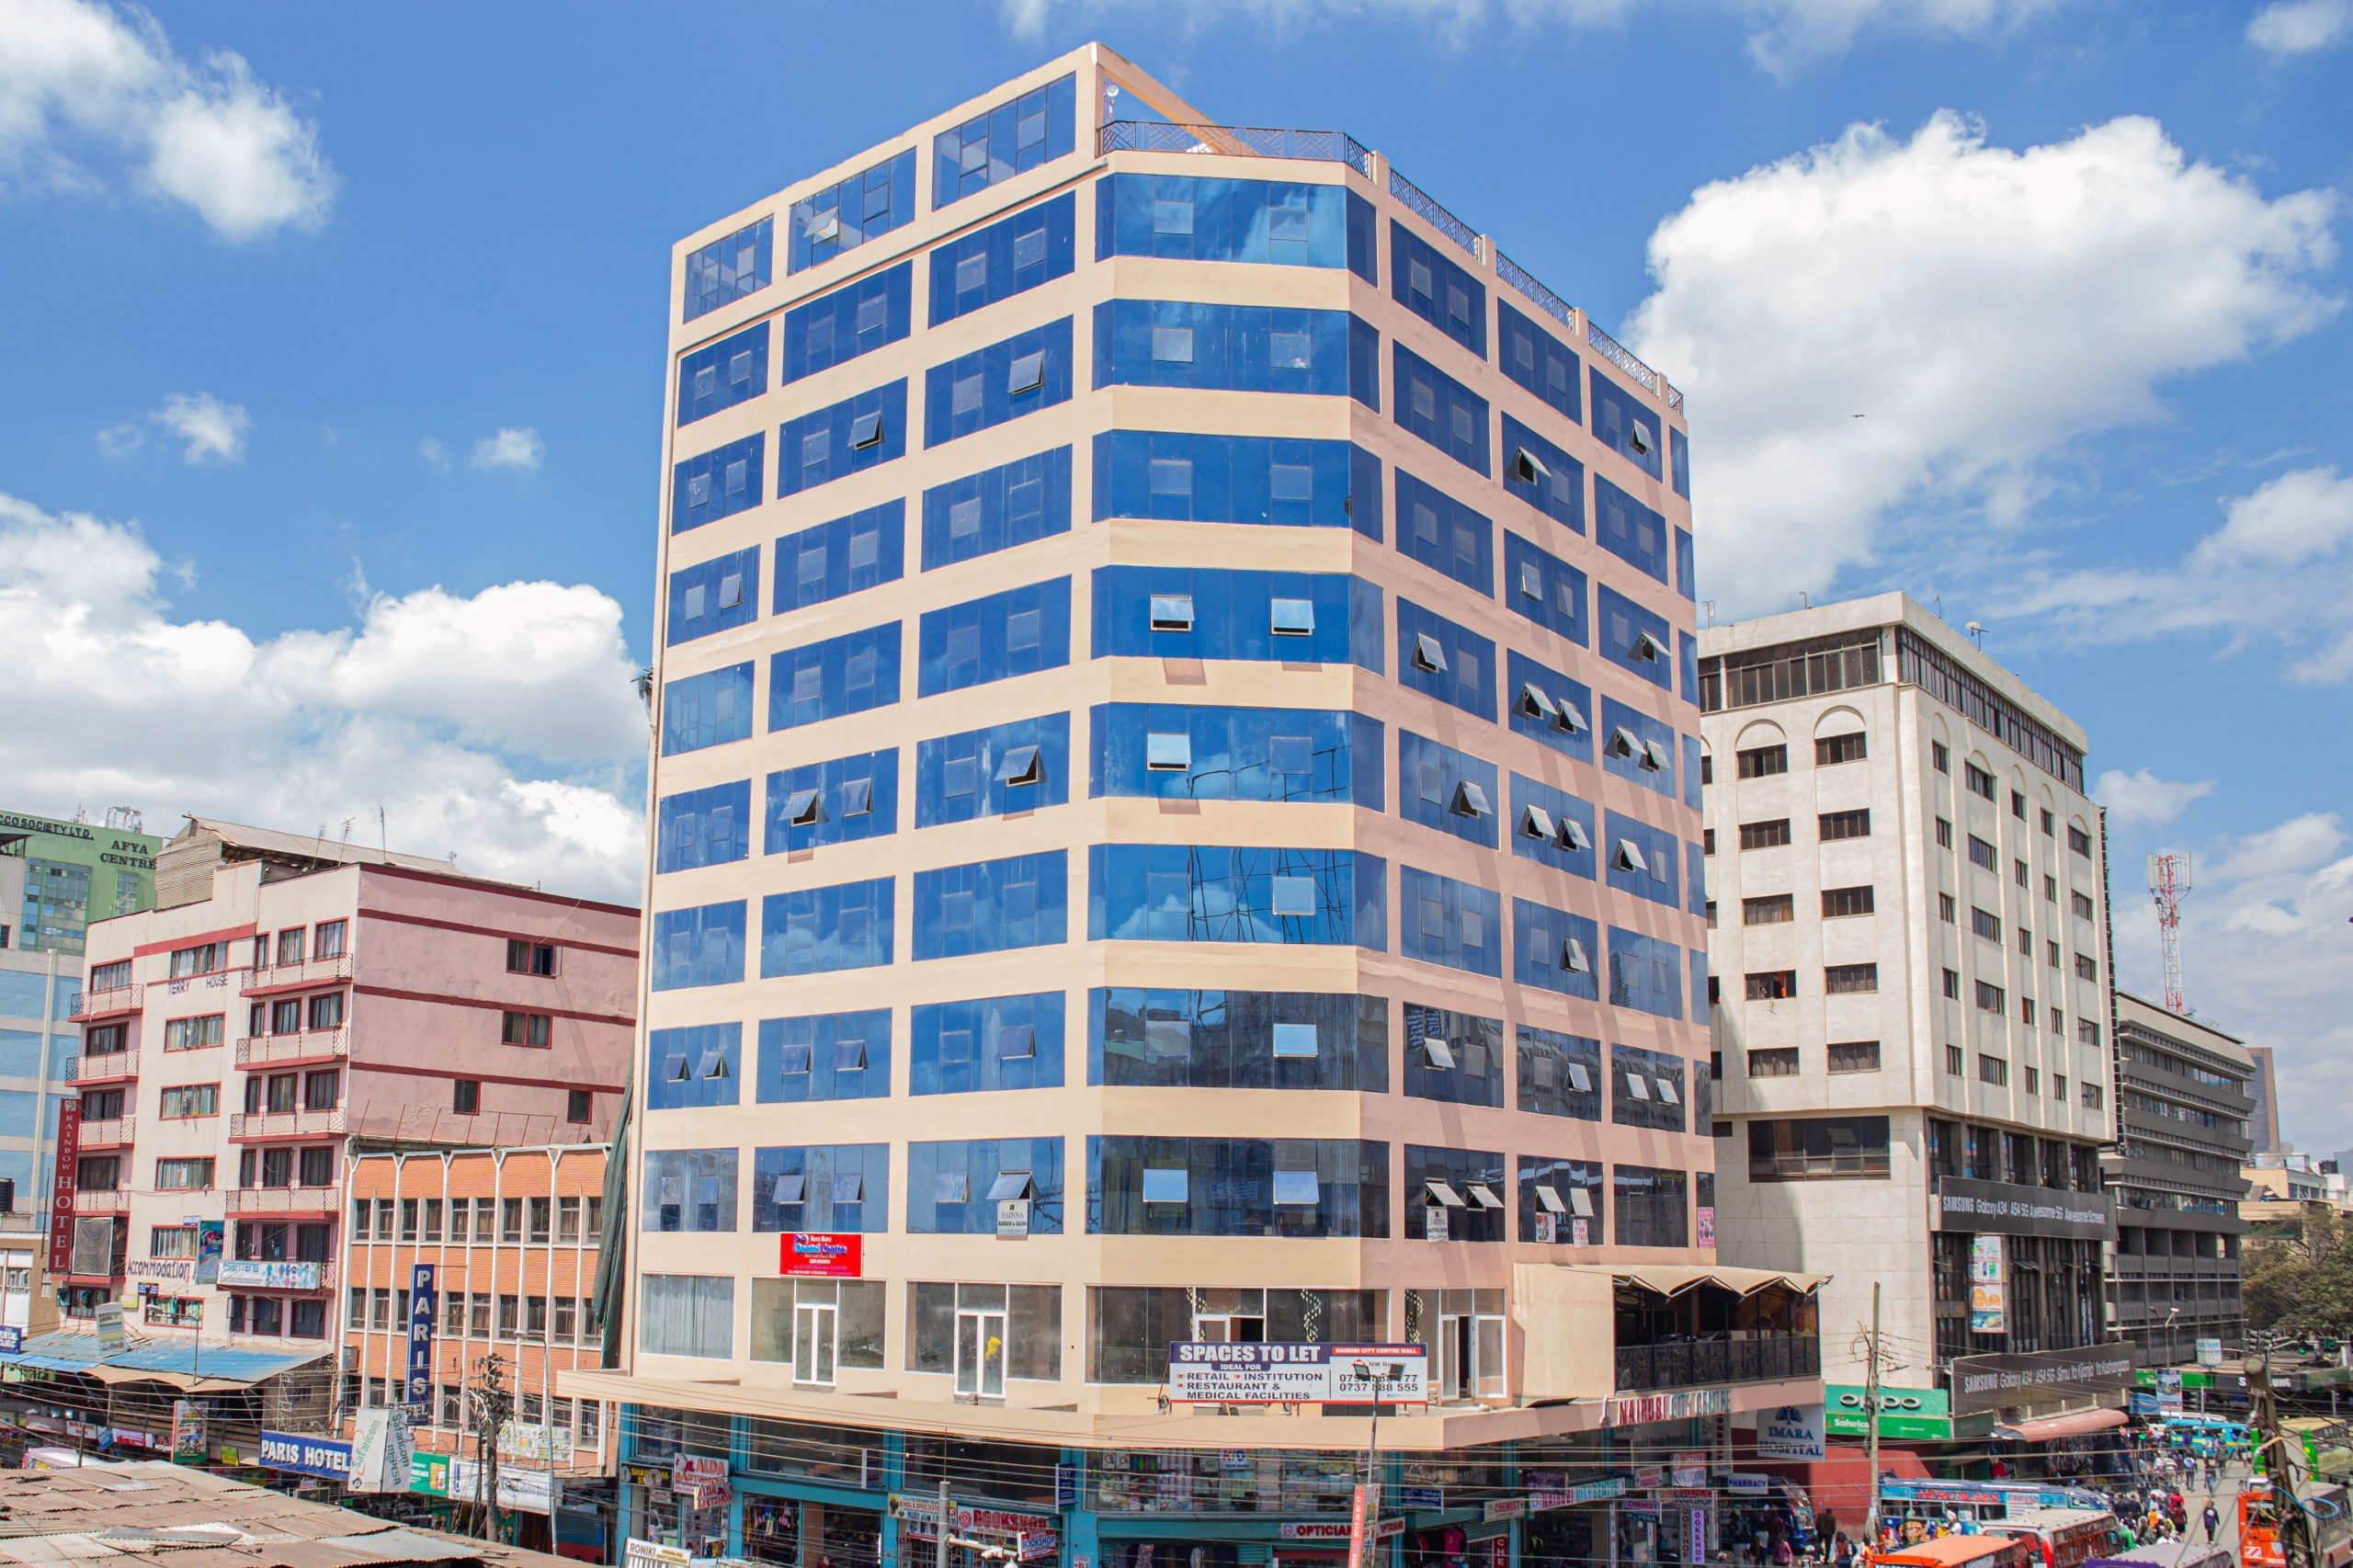 SHOPS & OFFICES FOR RENT IN NAIROBI CBD